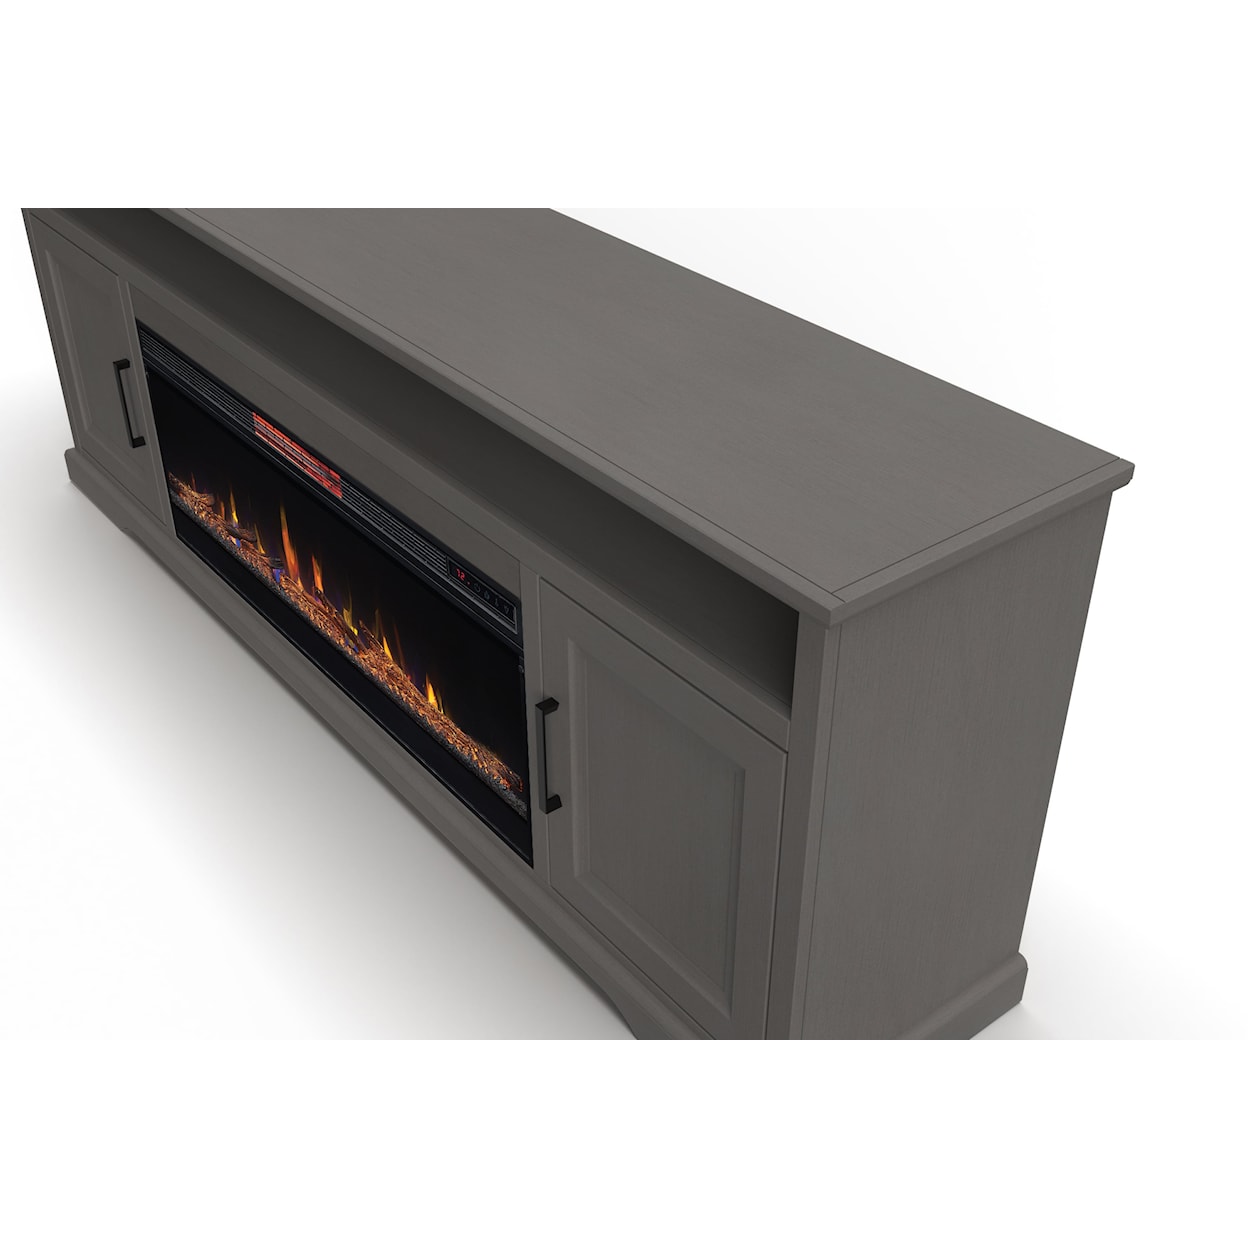 Legends Furniture Cheyenne 86-Inch Fireplace Console